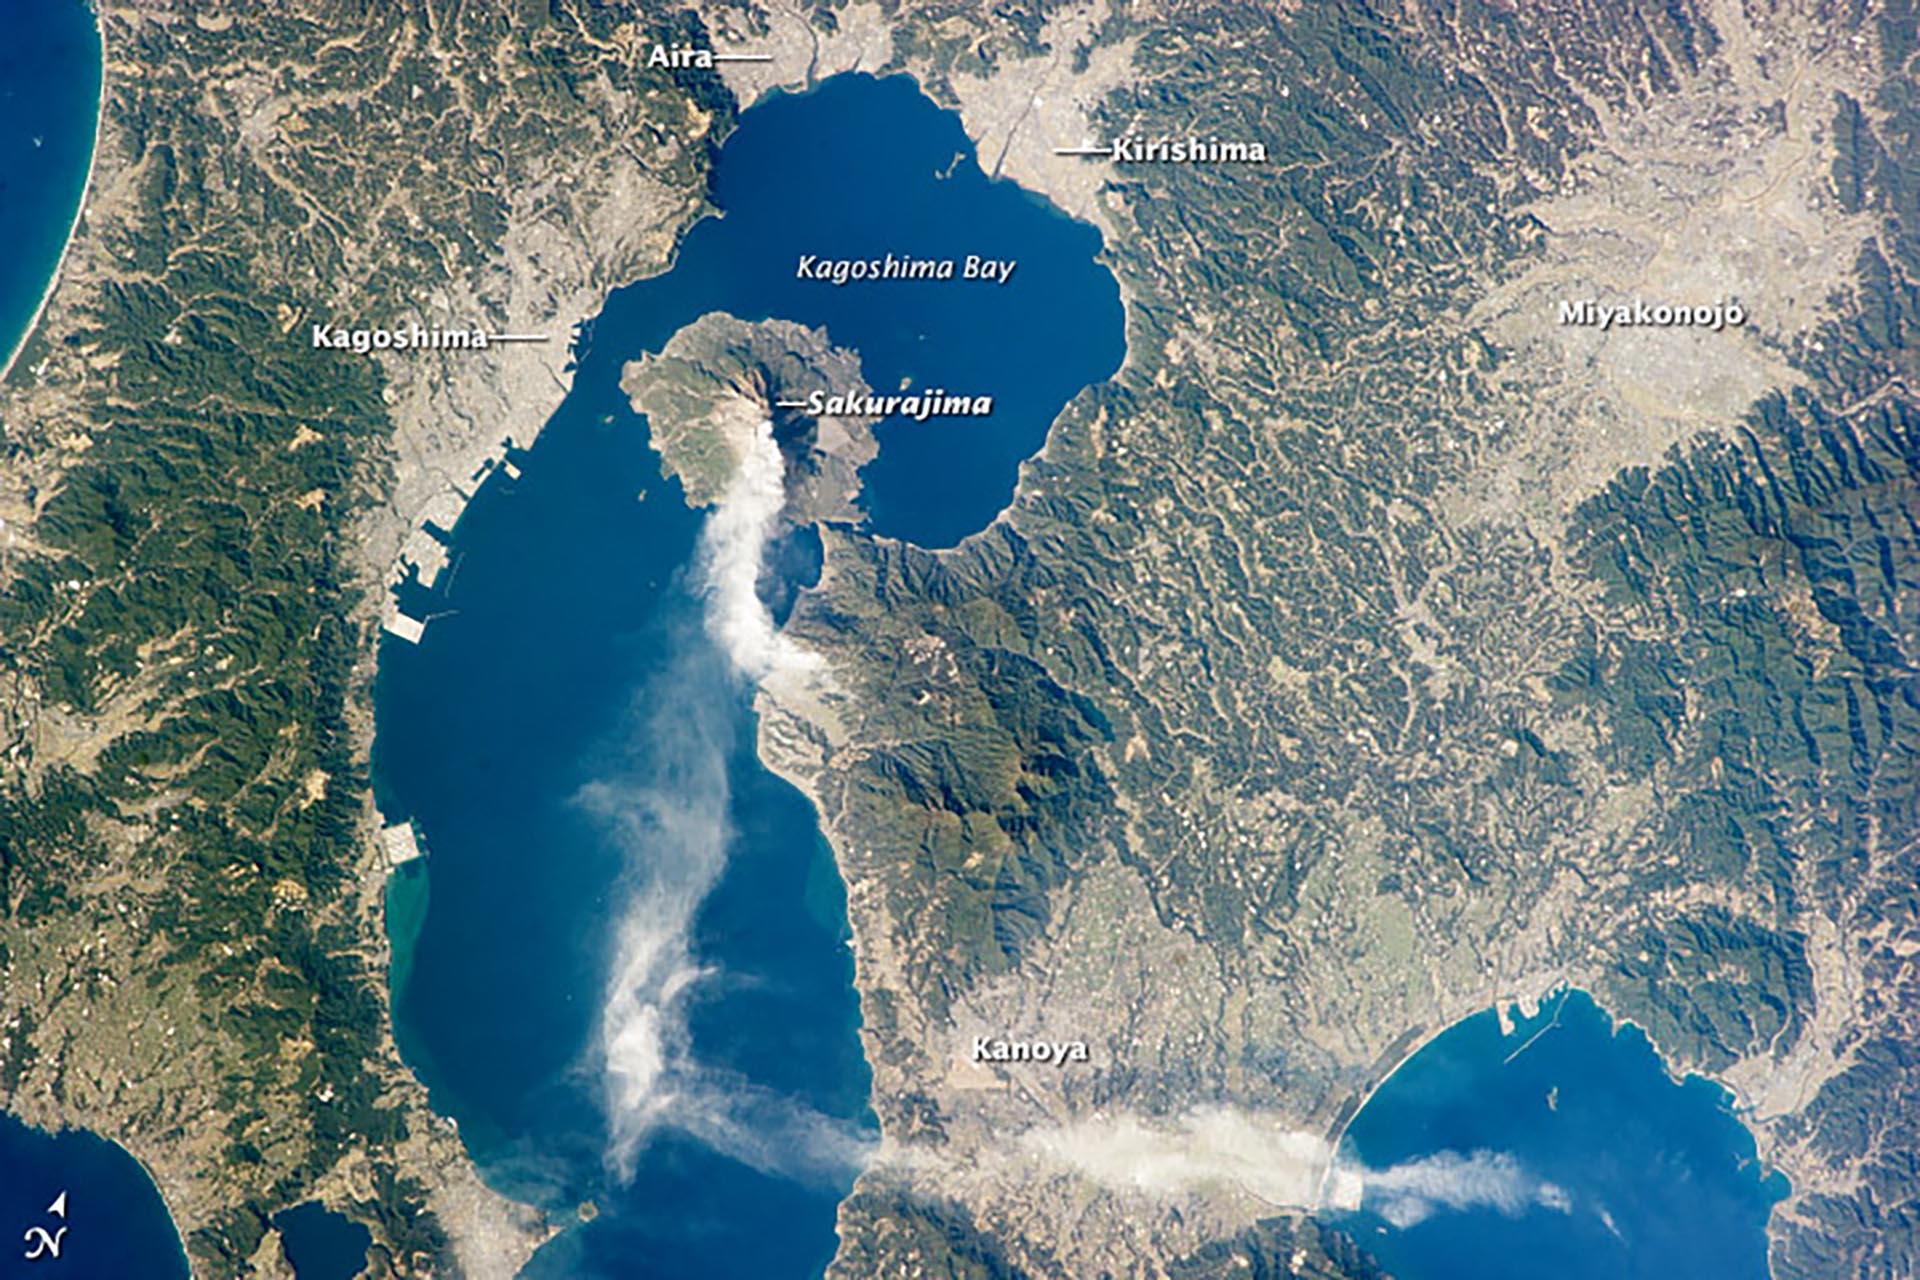 Satellite image of a smoke cloud from Sakurajima's activity.